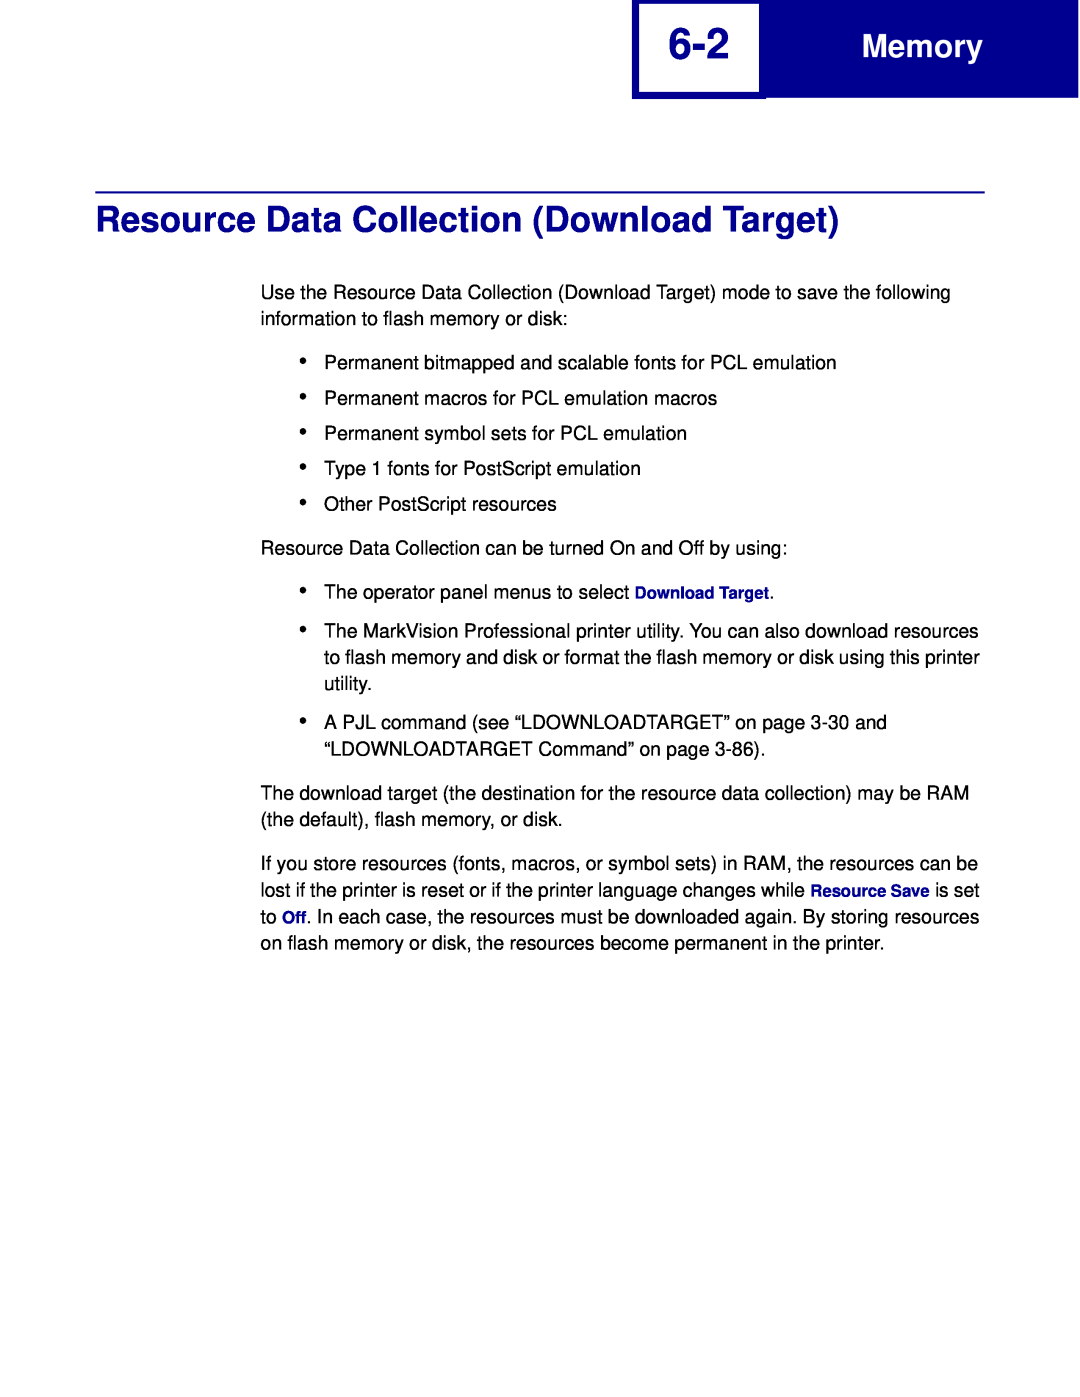 Lexmark C762, C760 manual Resource Data Collection Download Target, Memory 